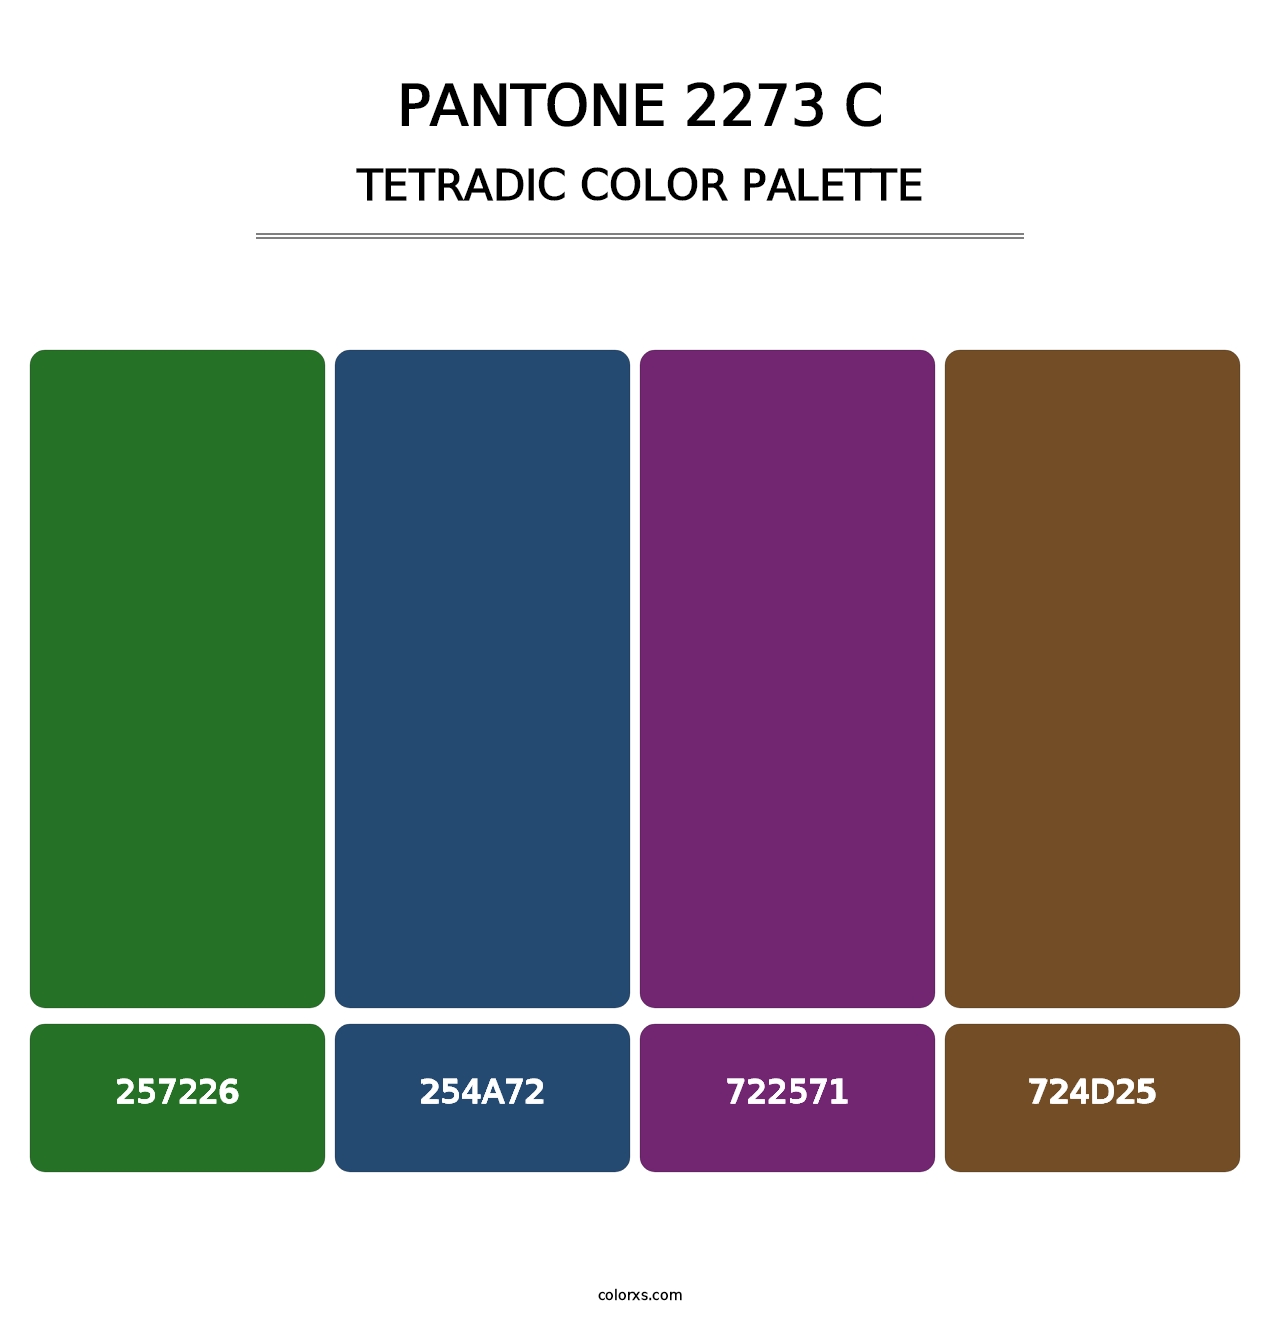 PANTONE 2273 C - Tetradic Color Palette